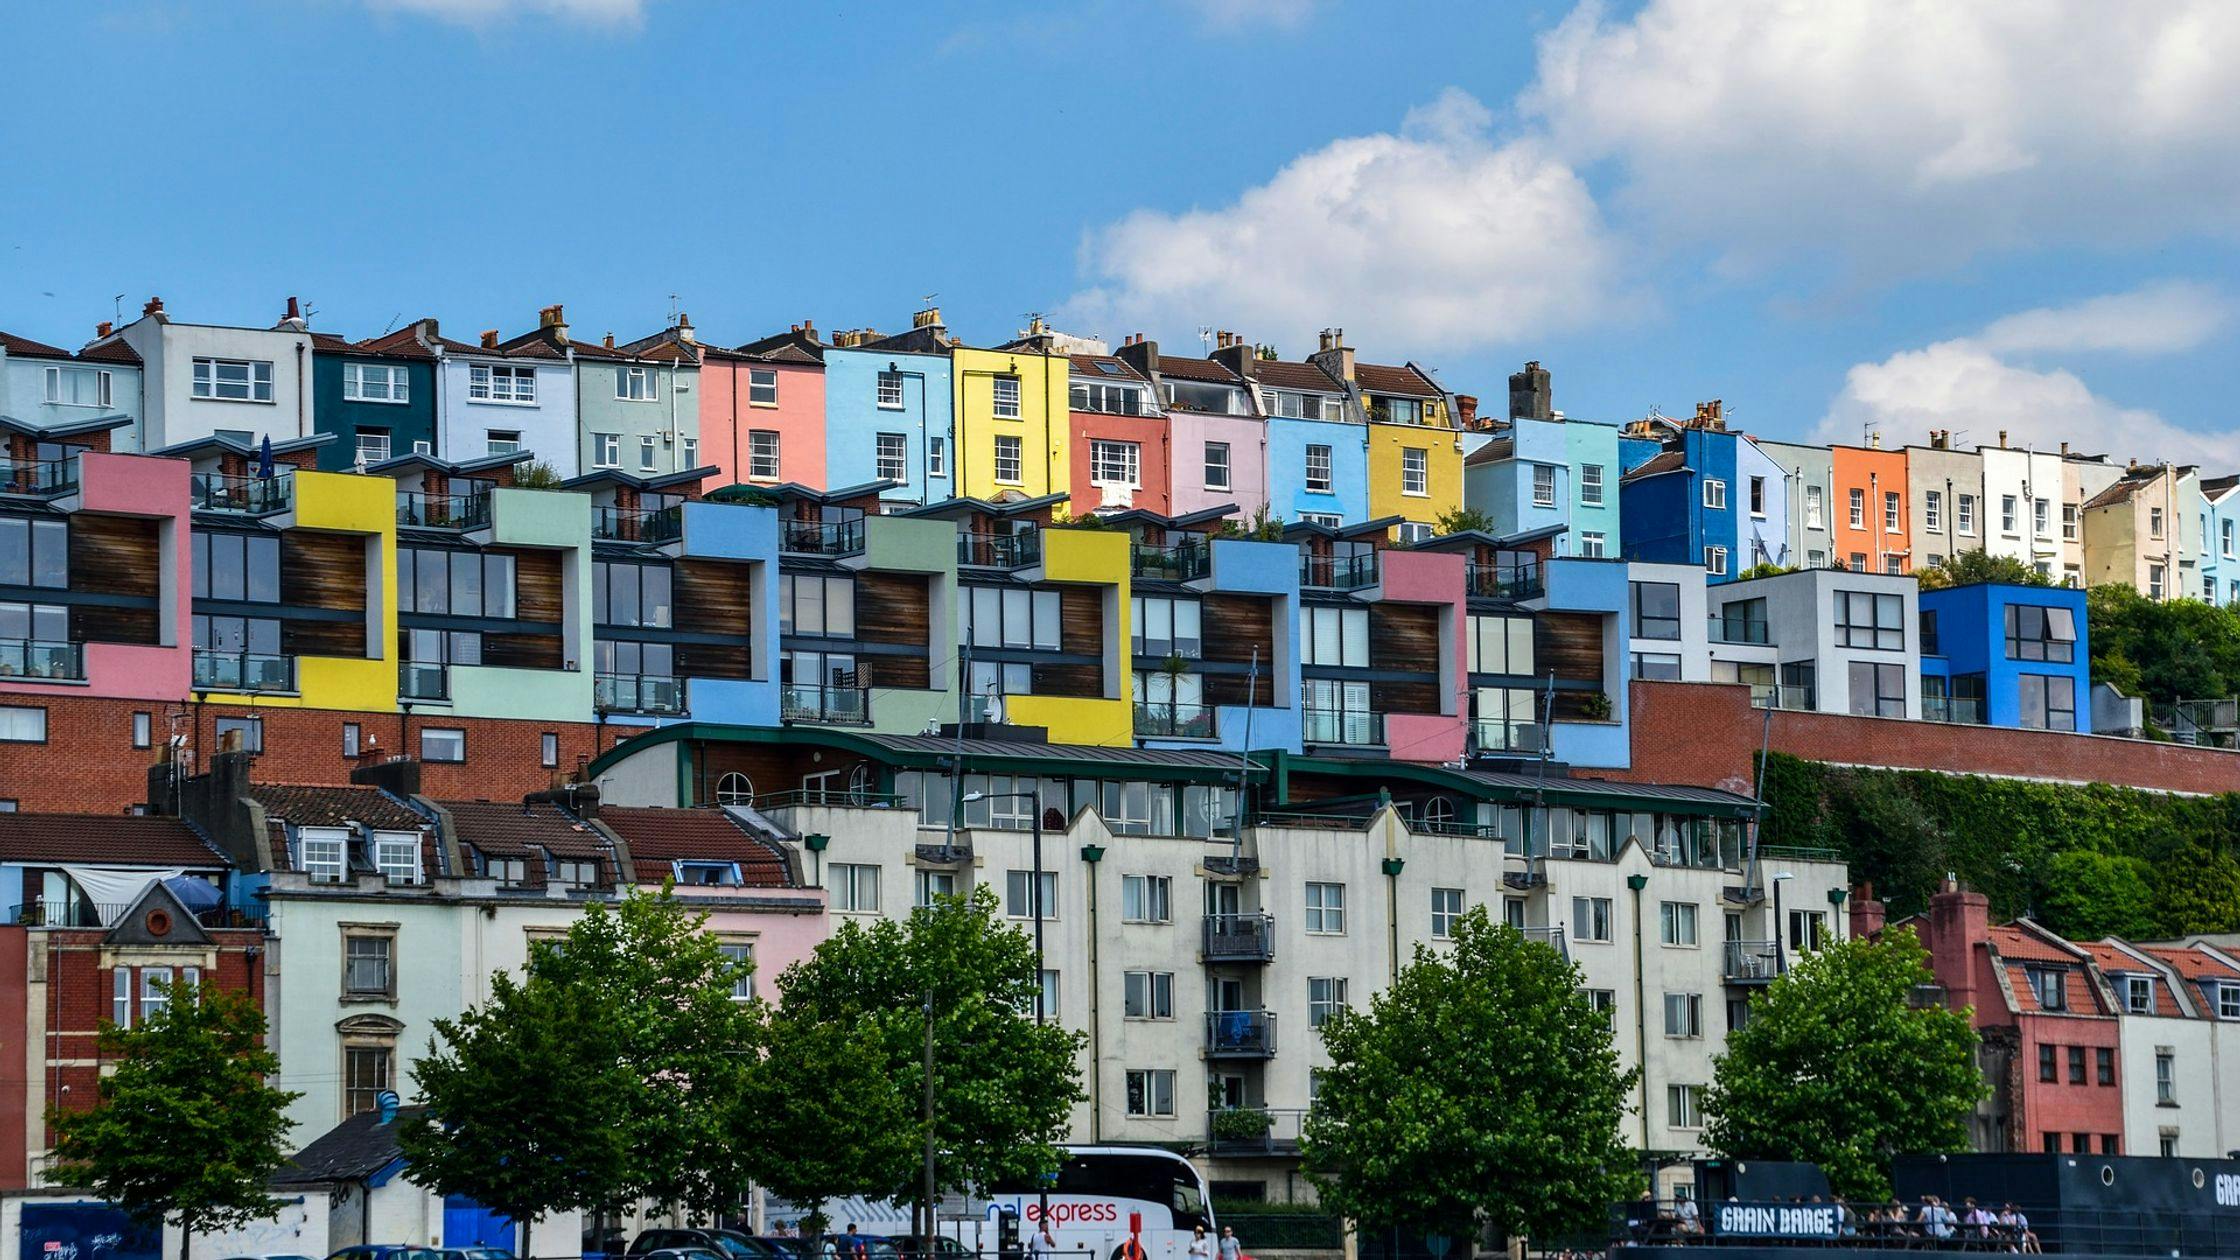 Houses in a row for bespoke Bristol Wordpress website